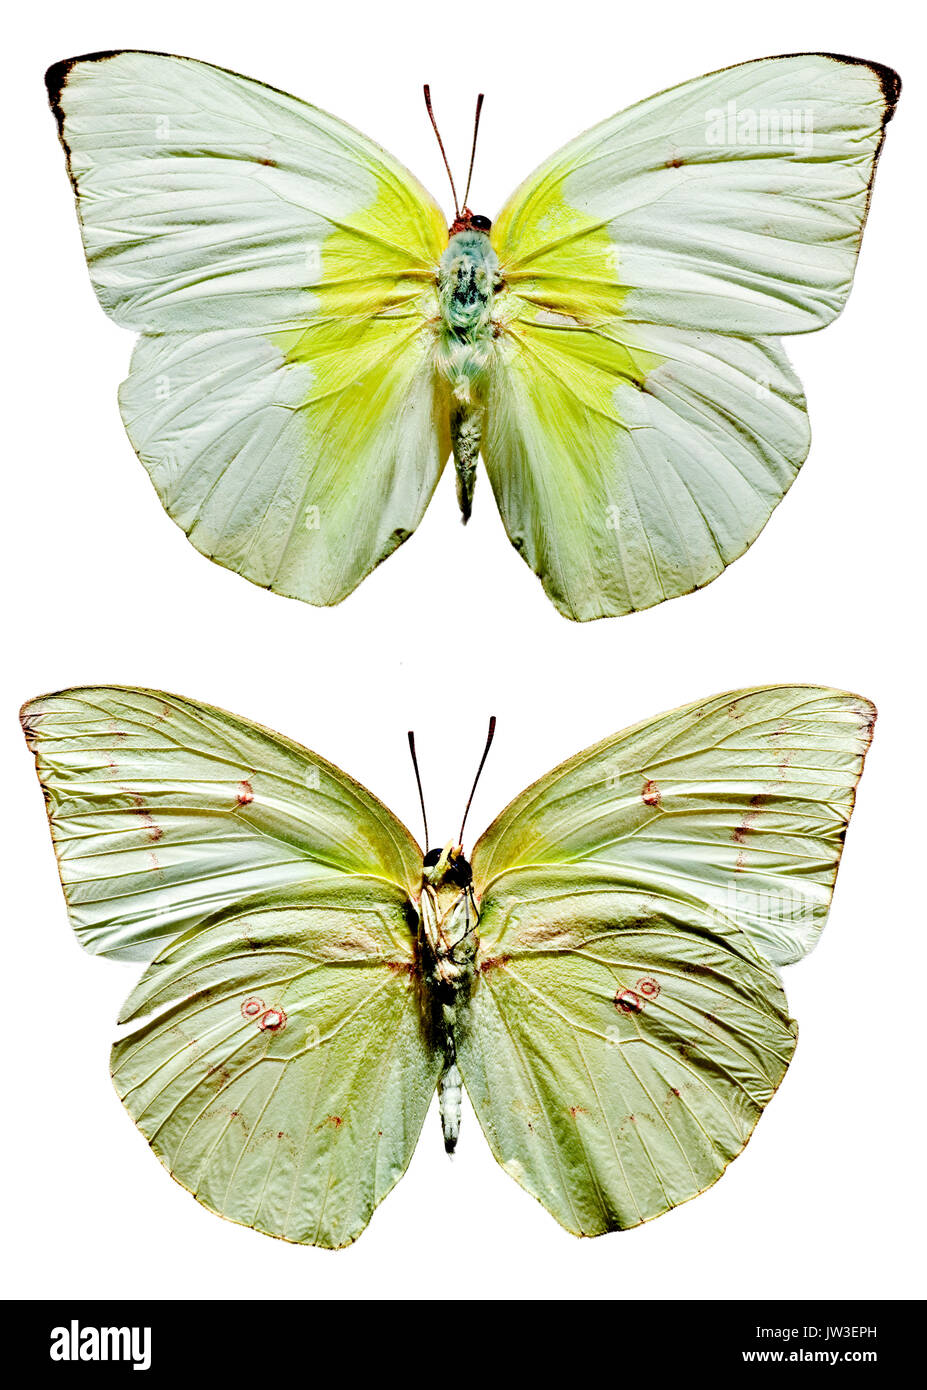 Lemon emigrante superior e inferior de la mariposa Foto de stock